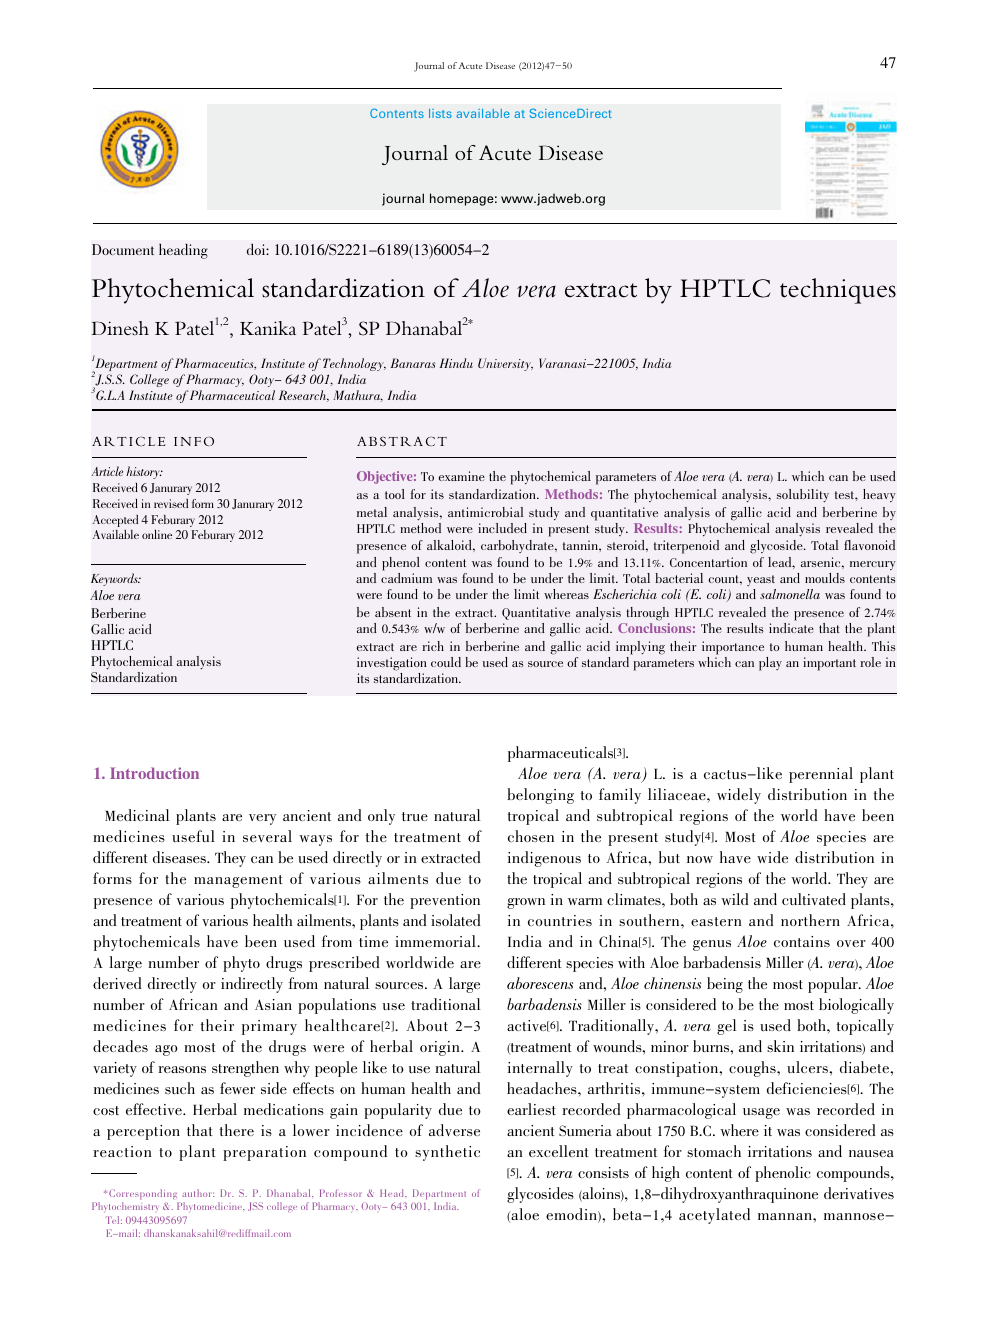 Phytochemical Standardization Of Aloe Vera Extract By Hptlc